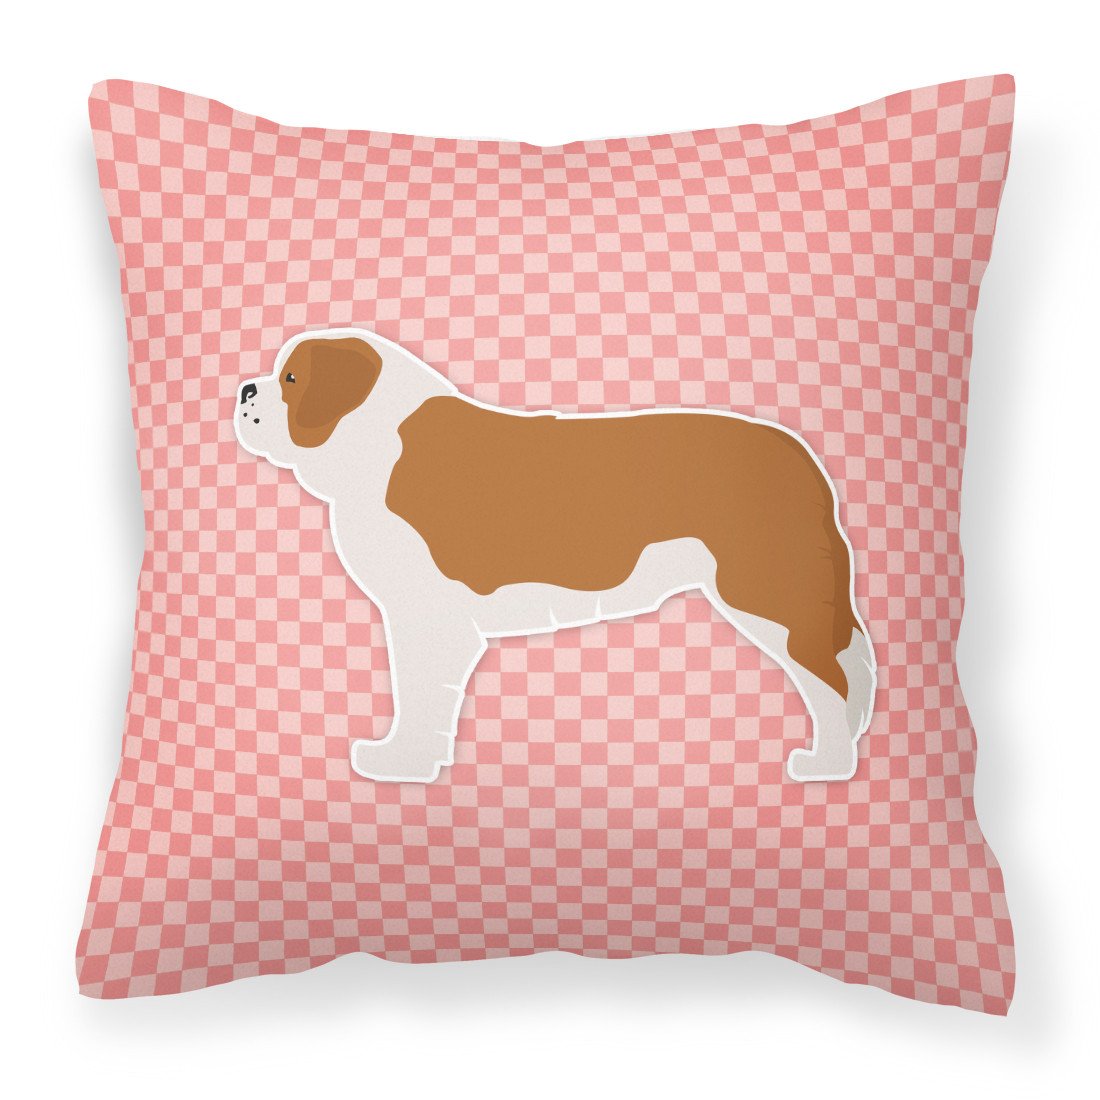 Saint Bernard Checkerboard Pink Fabric Decorative Pillow BB3676PW1818 by Caroline's Treasures